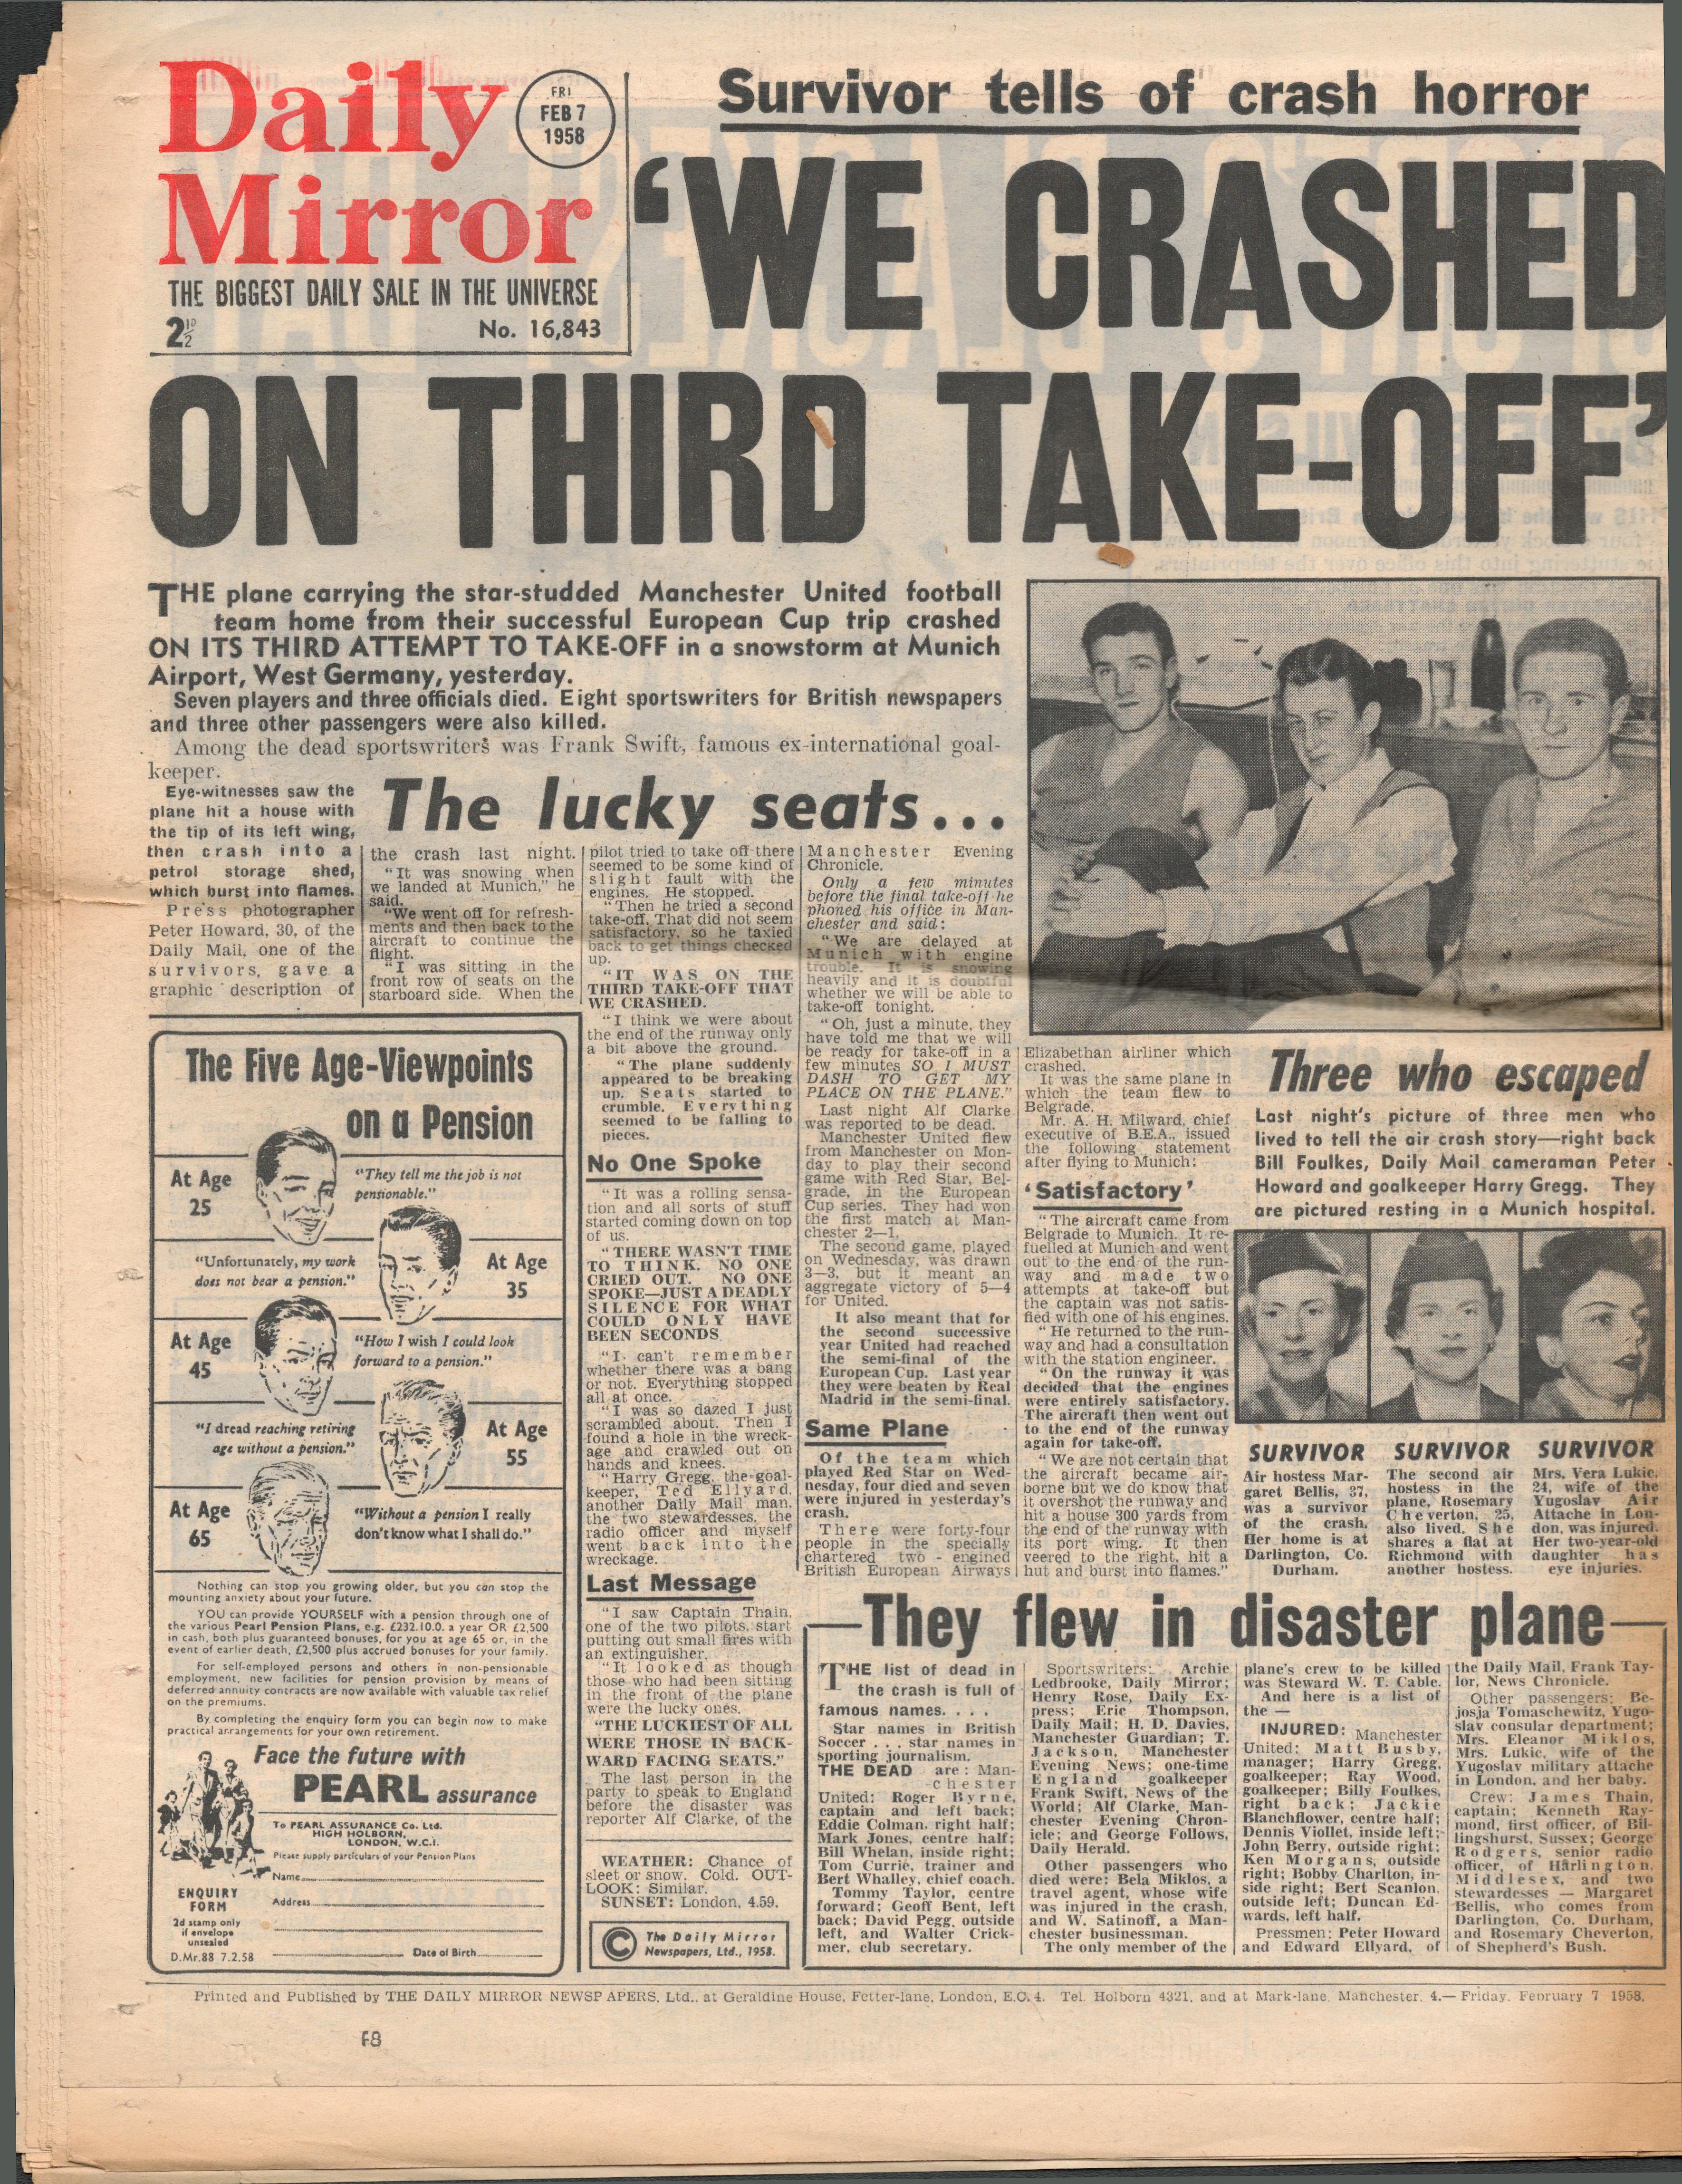 Manchester United Munich 1958 Original Daily Mirror Newspaper - Image 2 of 5